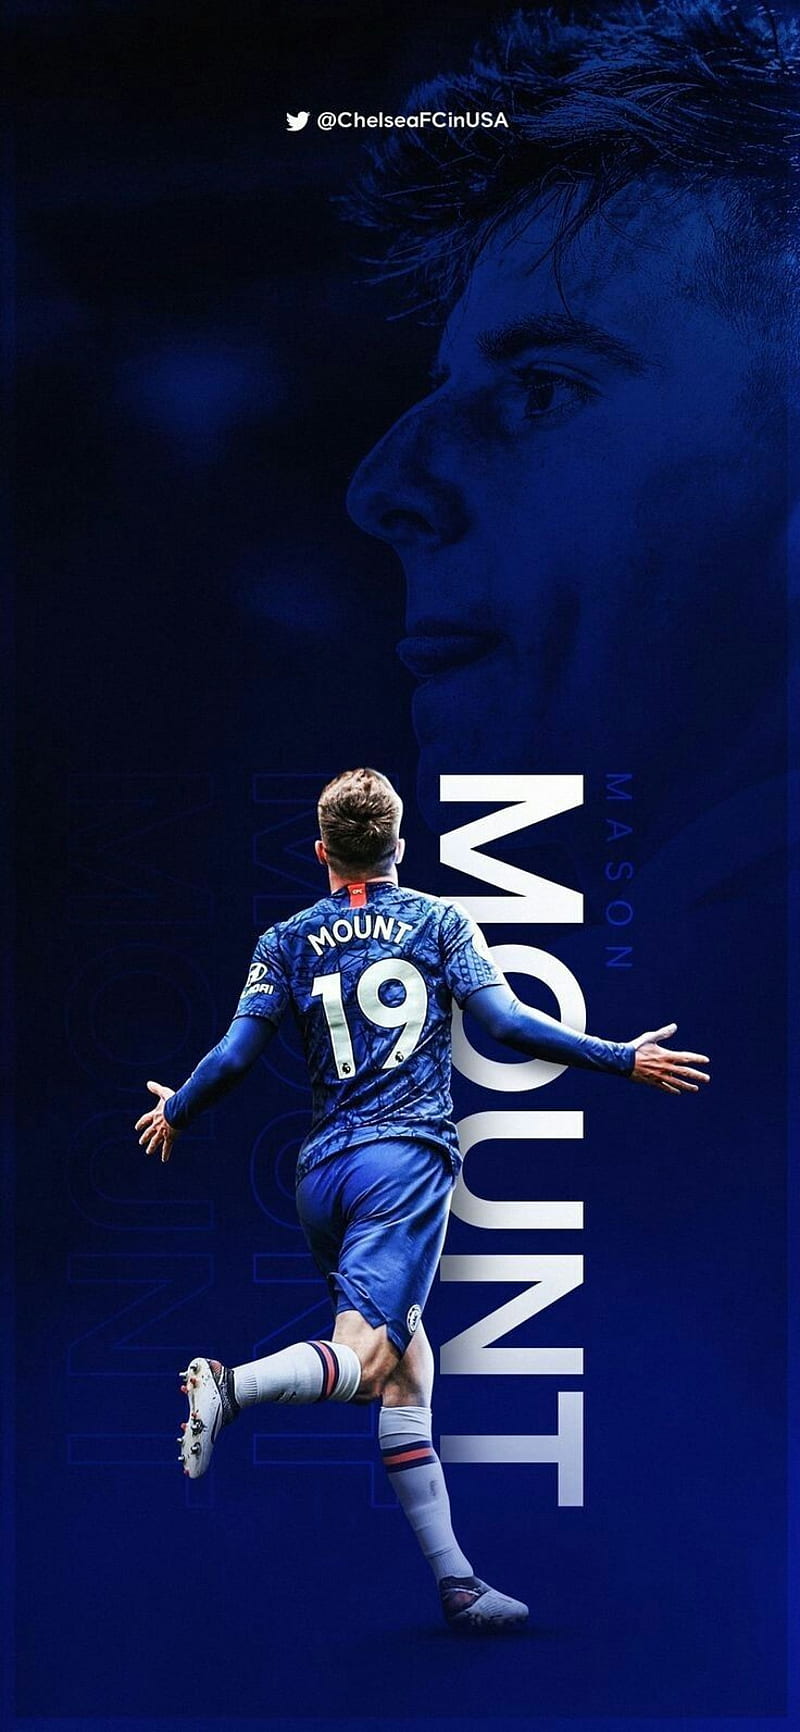 Mason Mount Wallpaper | Chelsea football club wallpapers, Chelsea fc  players, Chelsea football